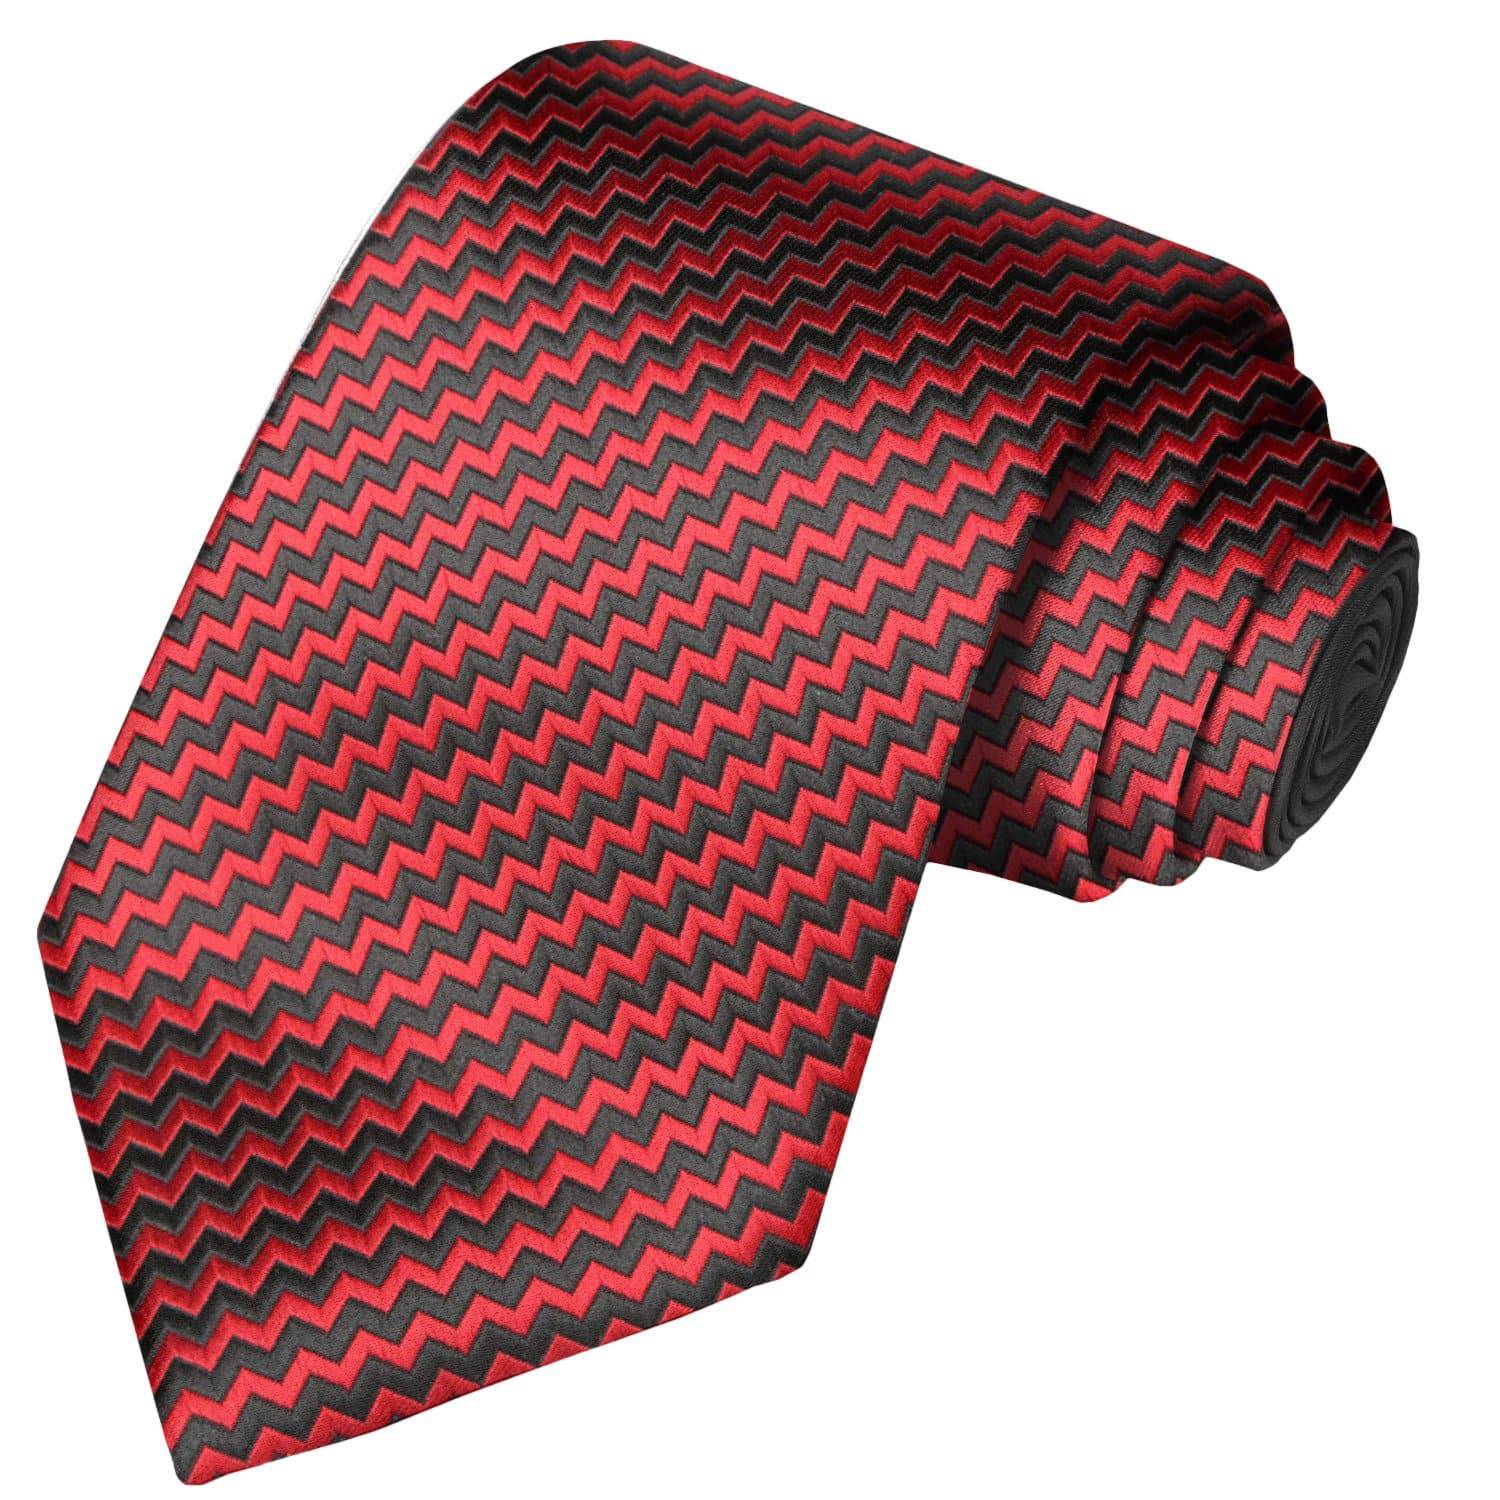 Zigzag Red-Black Stripe Tie - Tie, bowtie, pocket square  | Kissties